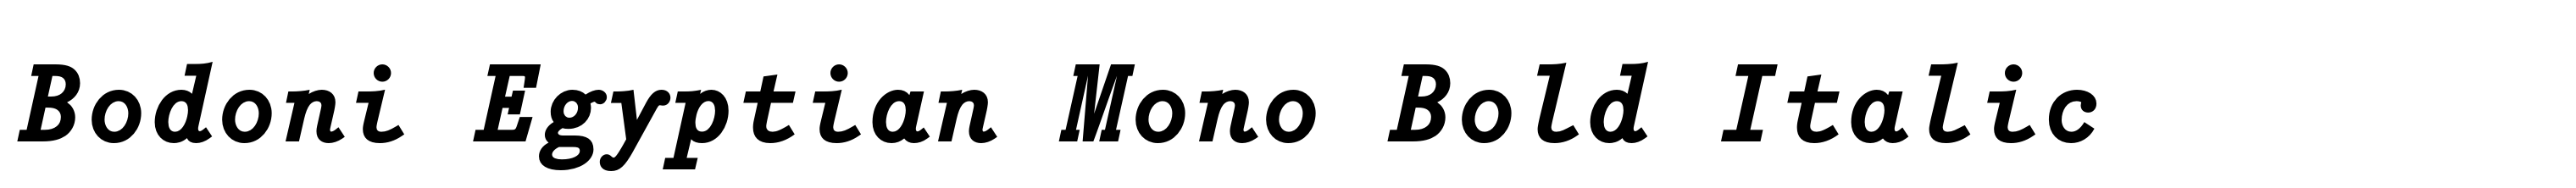 Bodoni Egyptian Mono Bold Italic